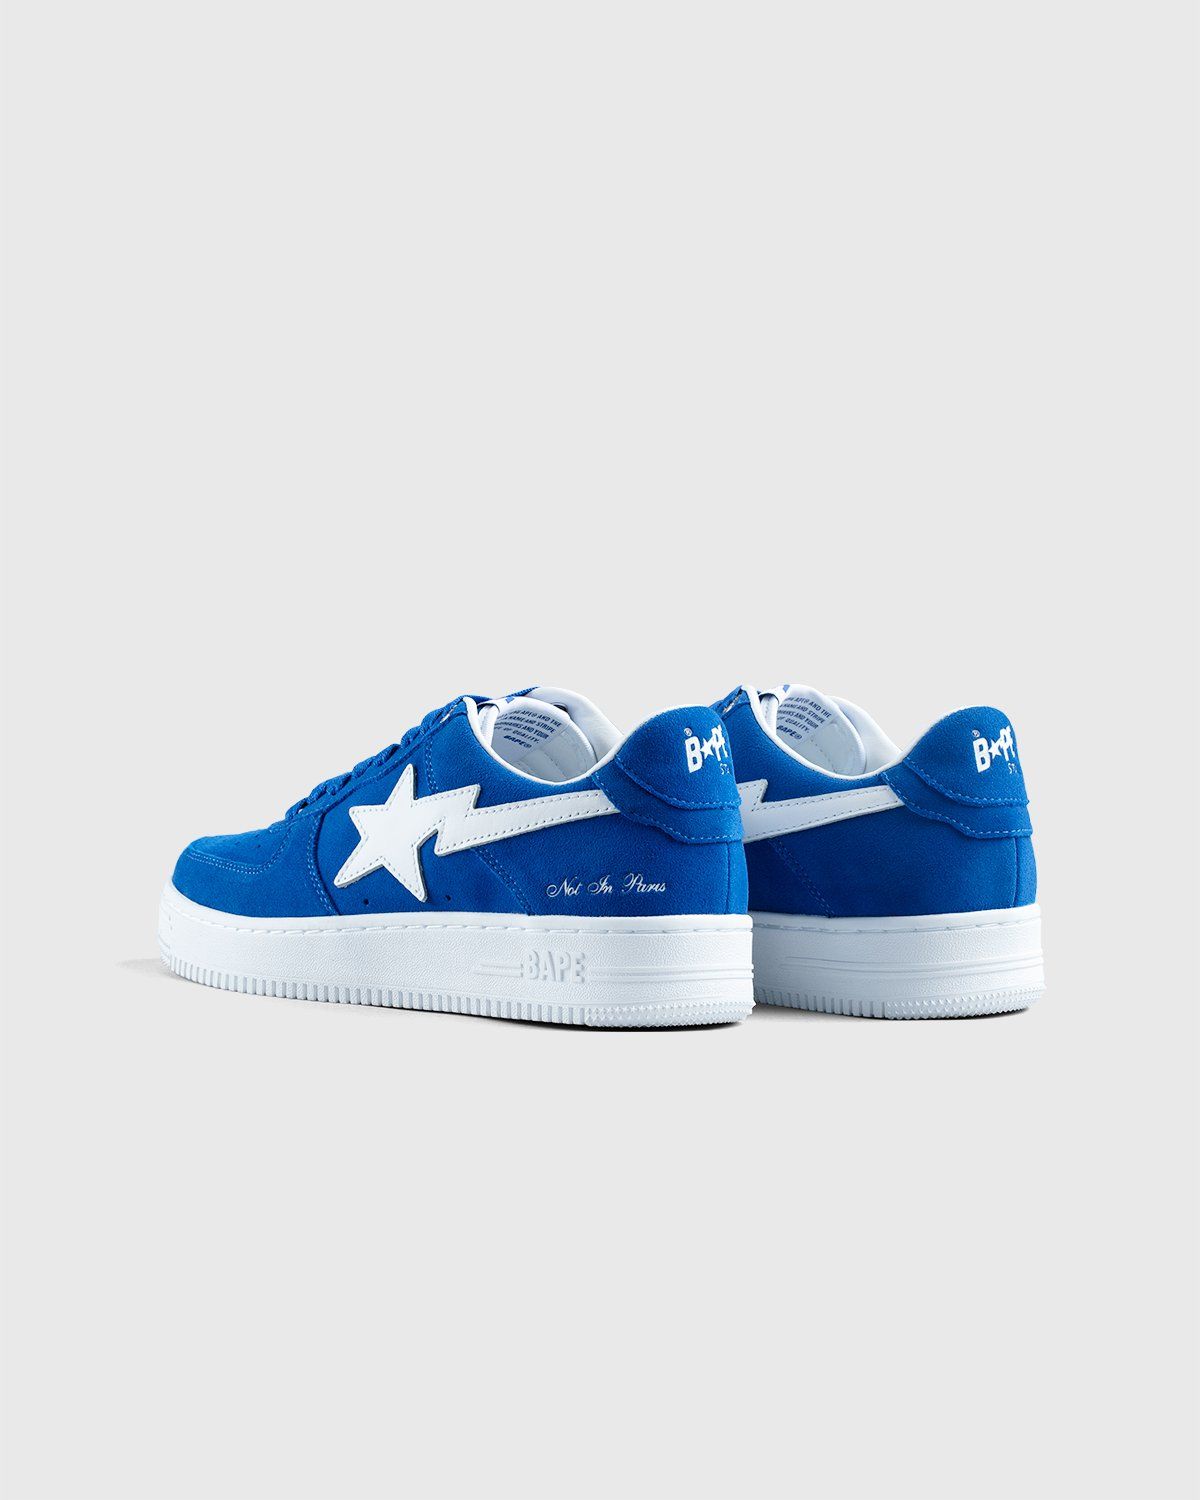 BAPE x Highsnobiety – BAPE STA Blue - Sneakers - Blue - Image 3